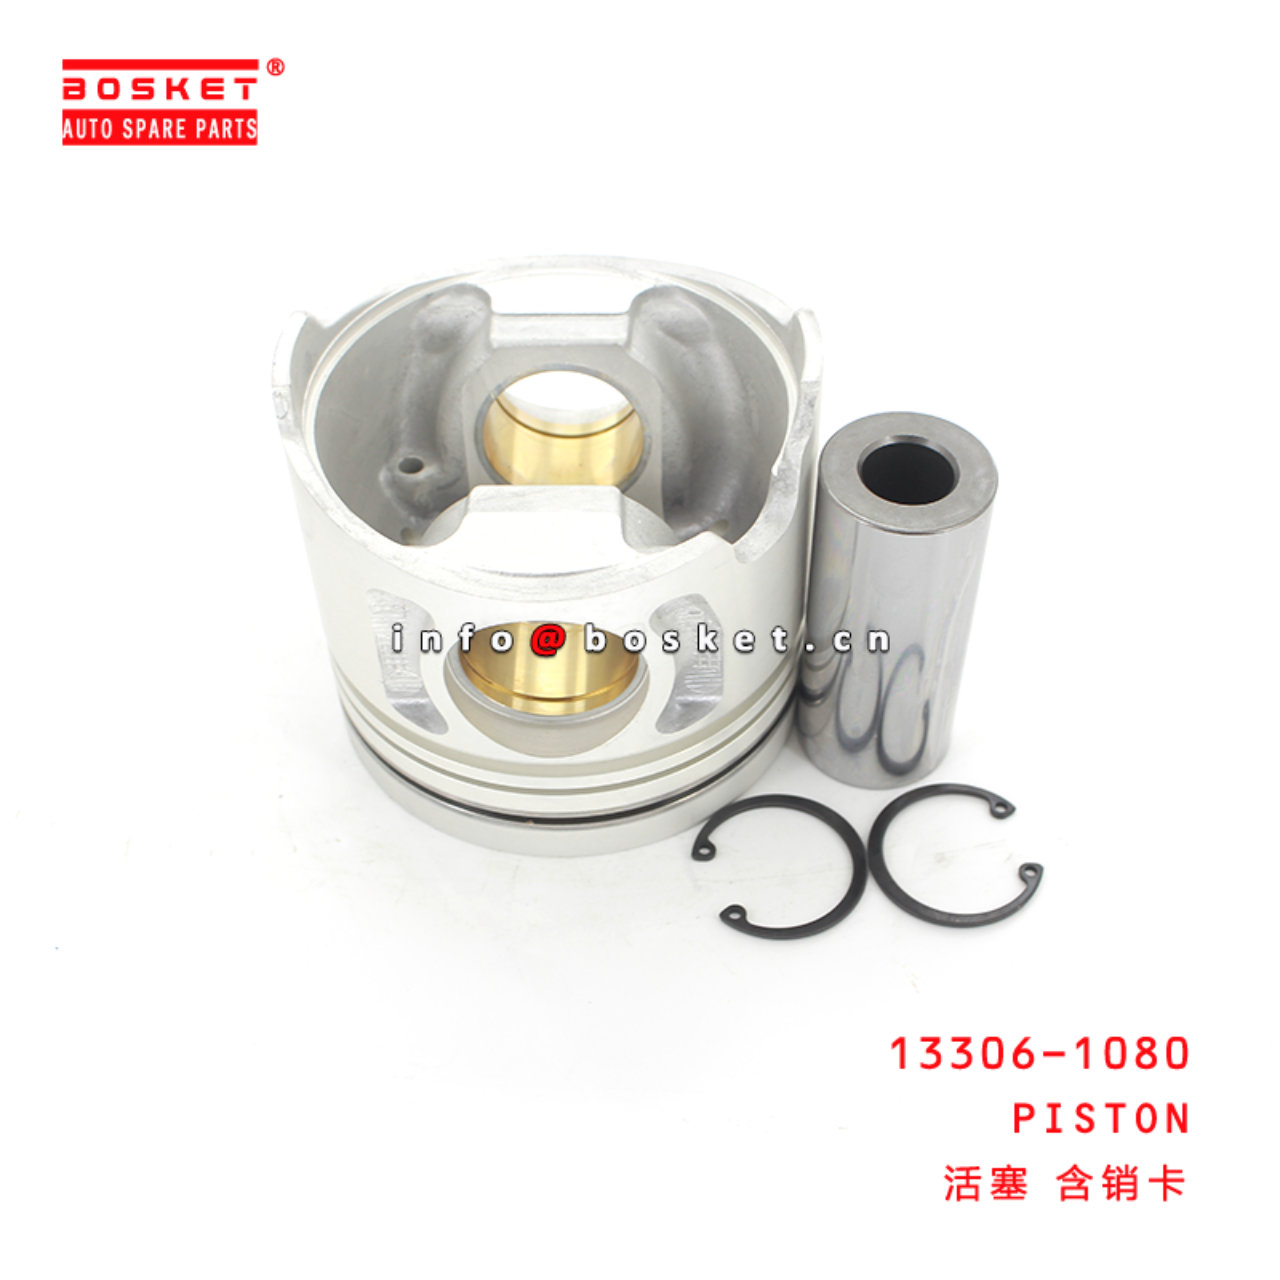 13306-1080 Piston Suitable for ISUZU HINO J08C